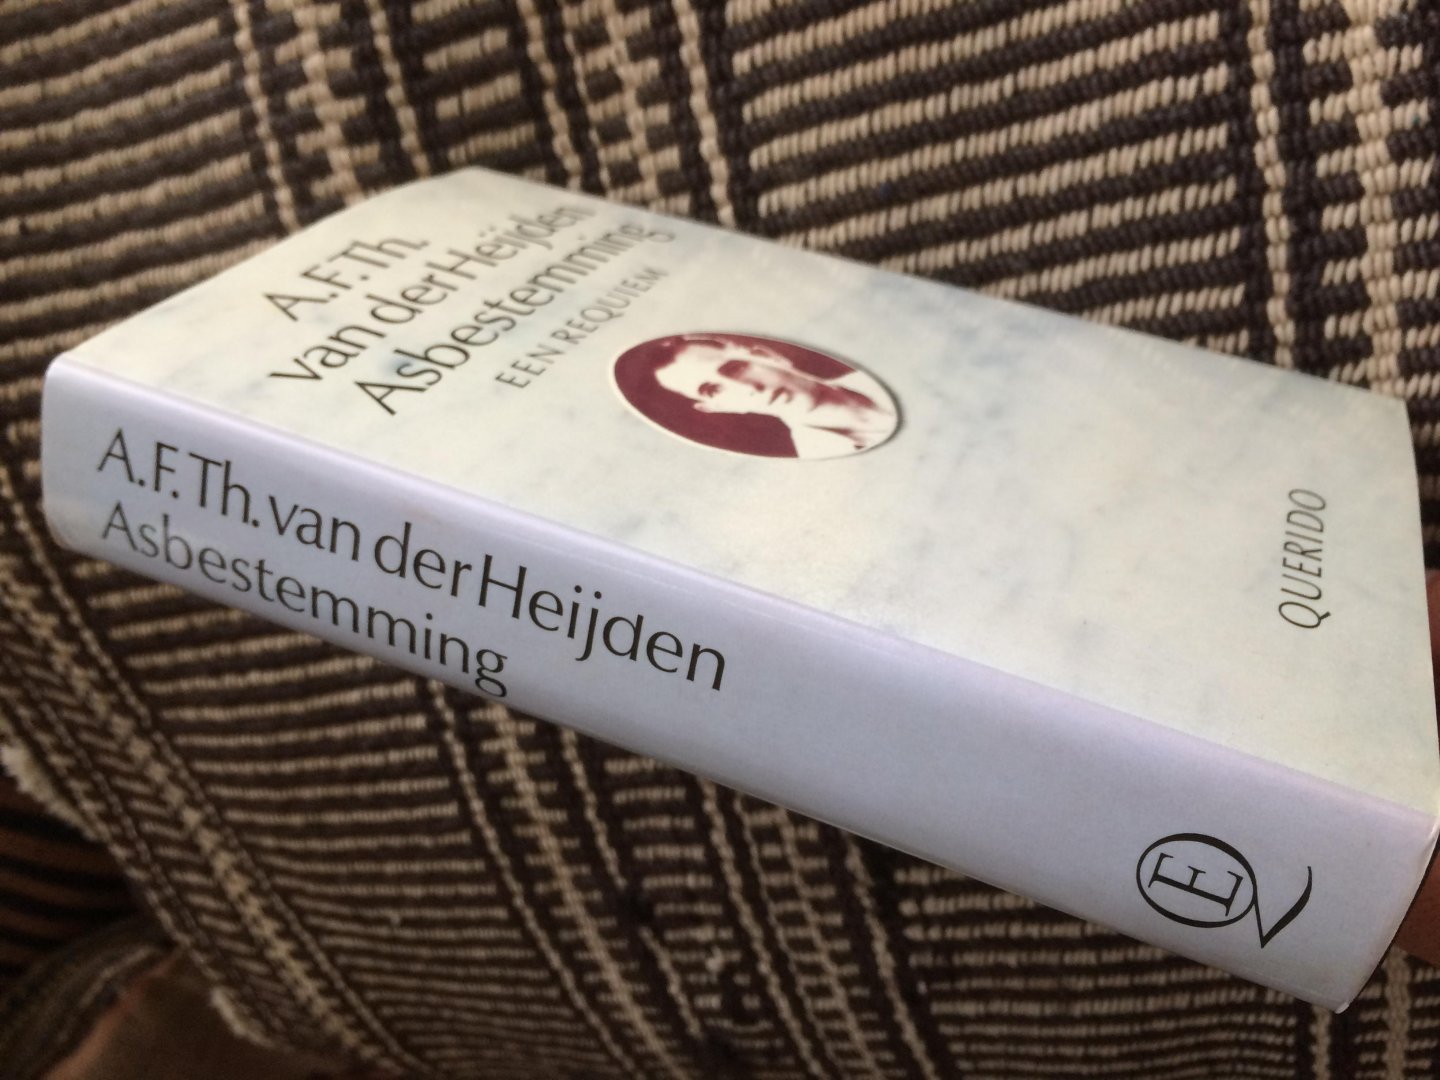 HEIJDEN, A F Th van der - Asbestemming